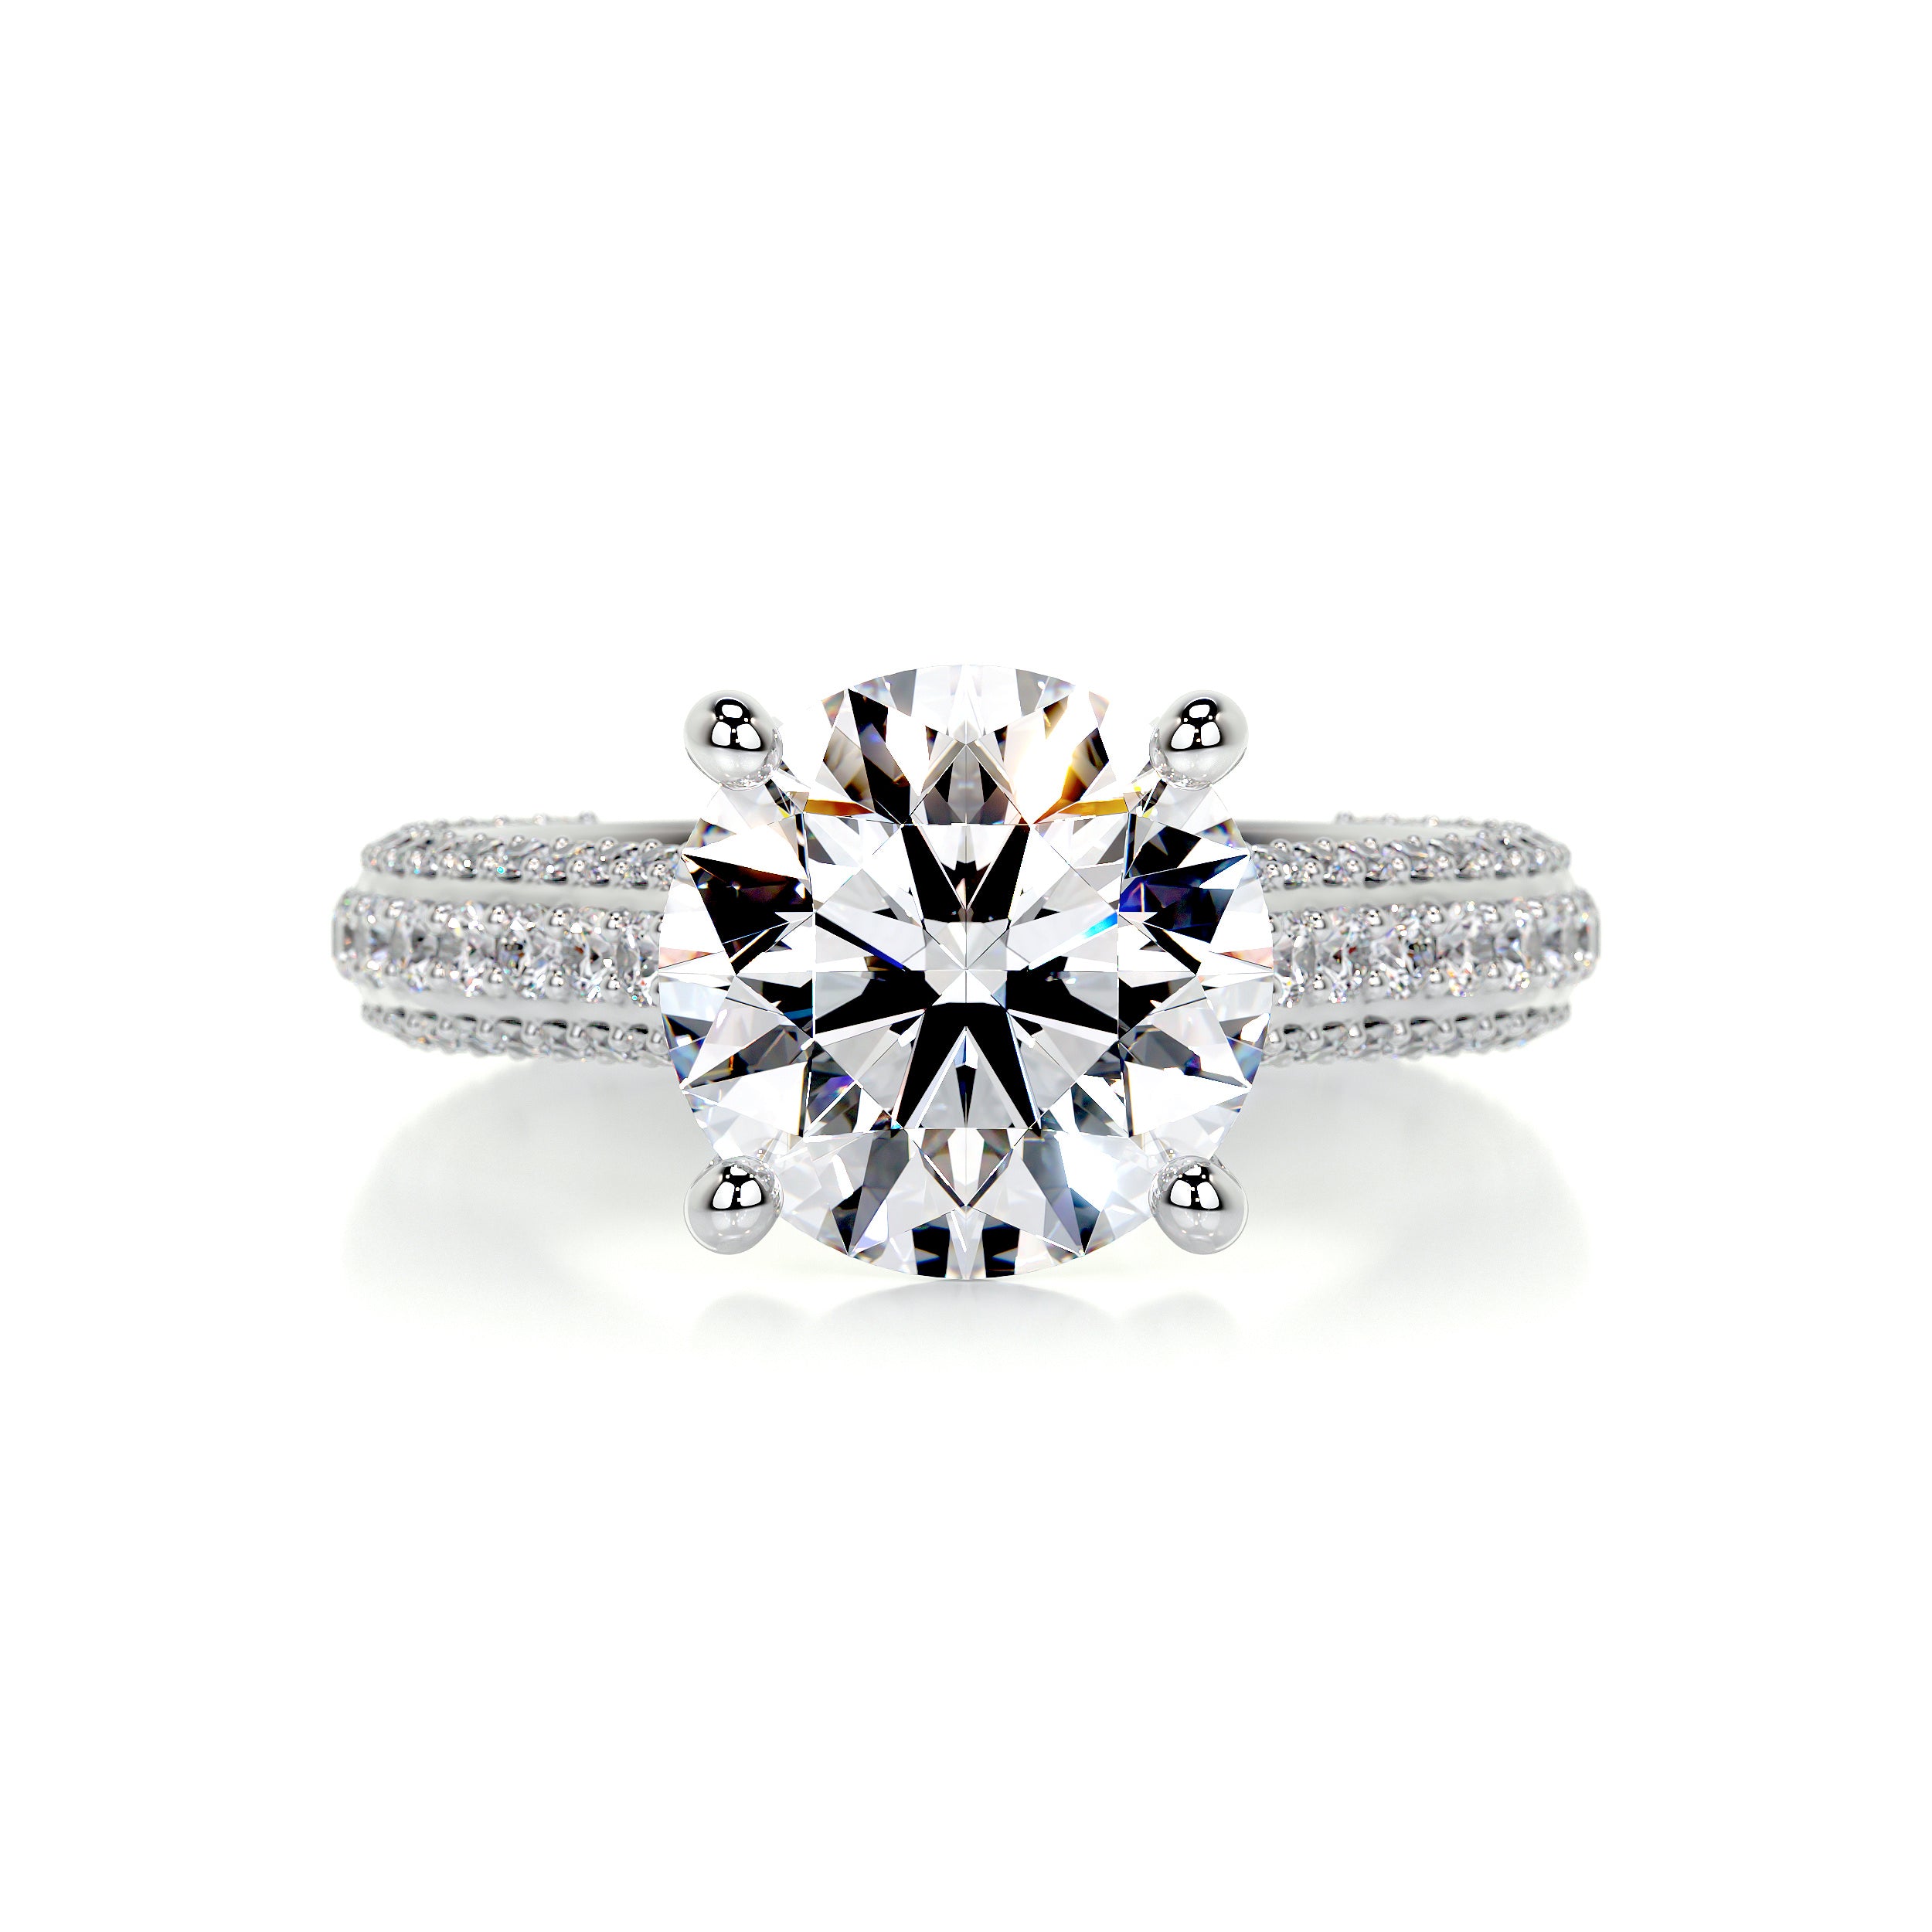 Janet Diamond Engagement Ring -18K White Gold